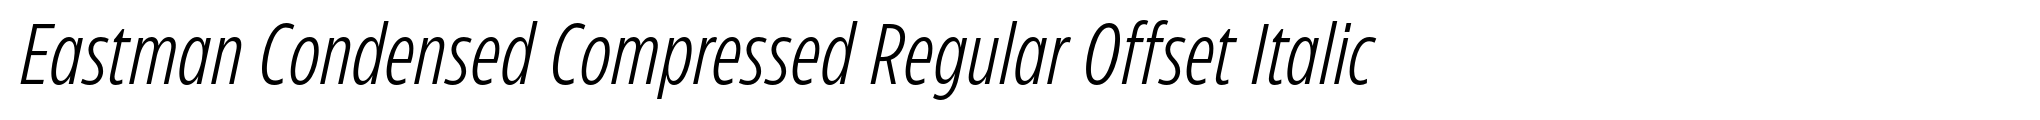 Eastman Condensed Compressed Regular Offset Italic image